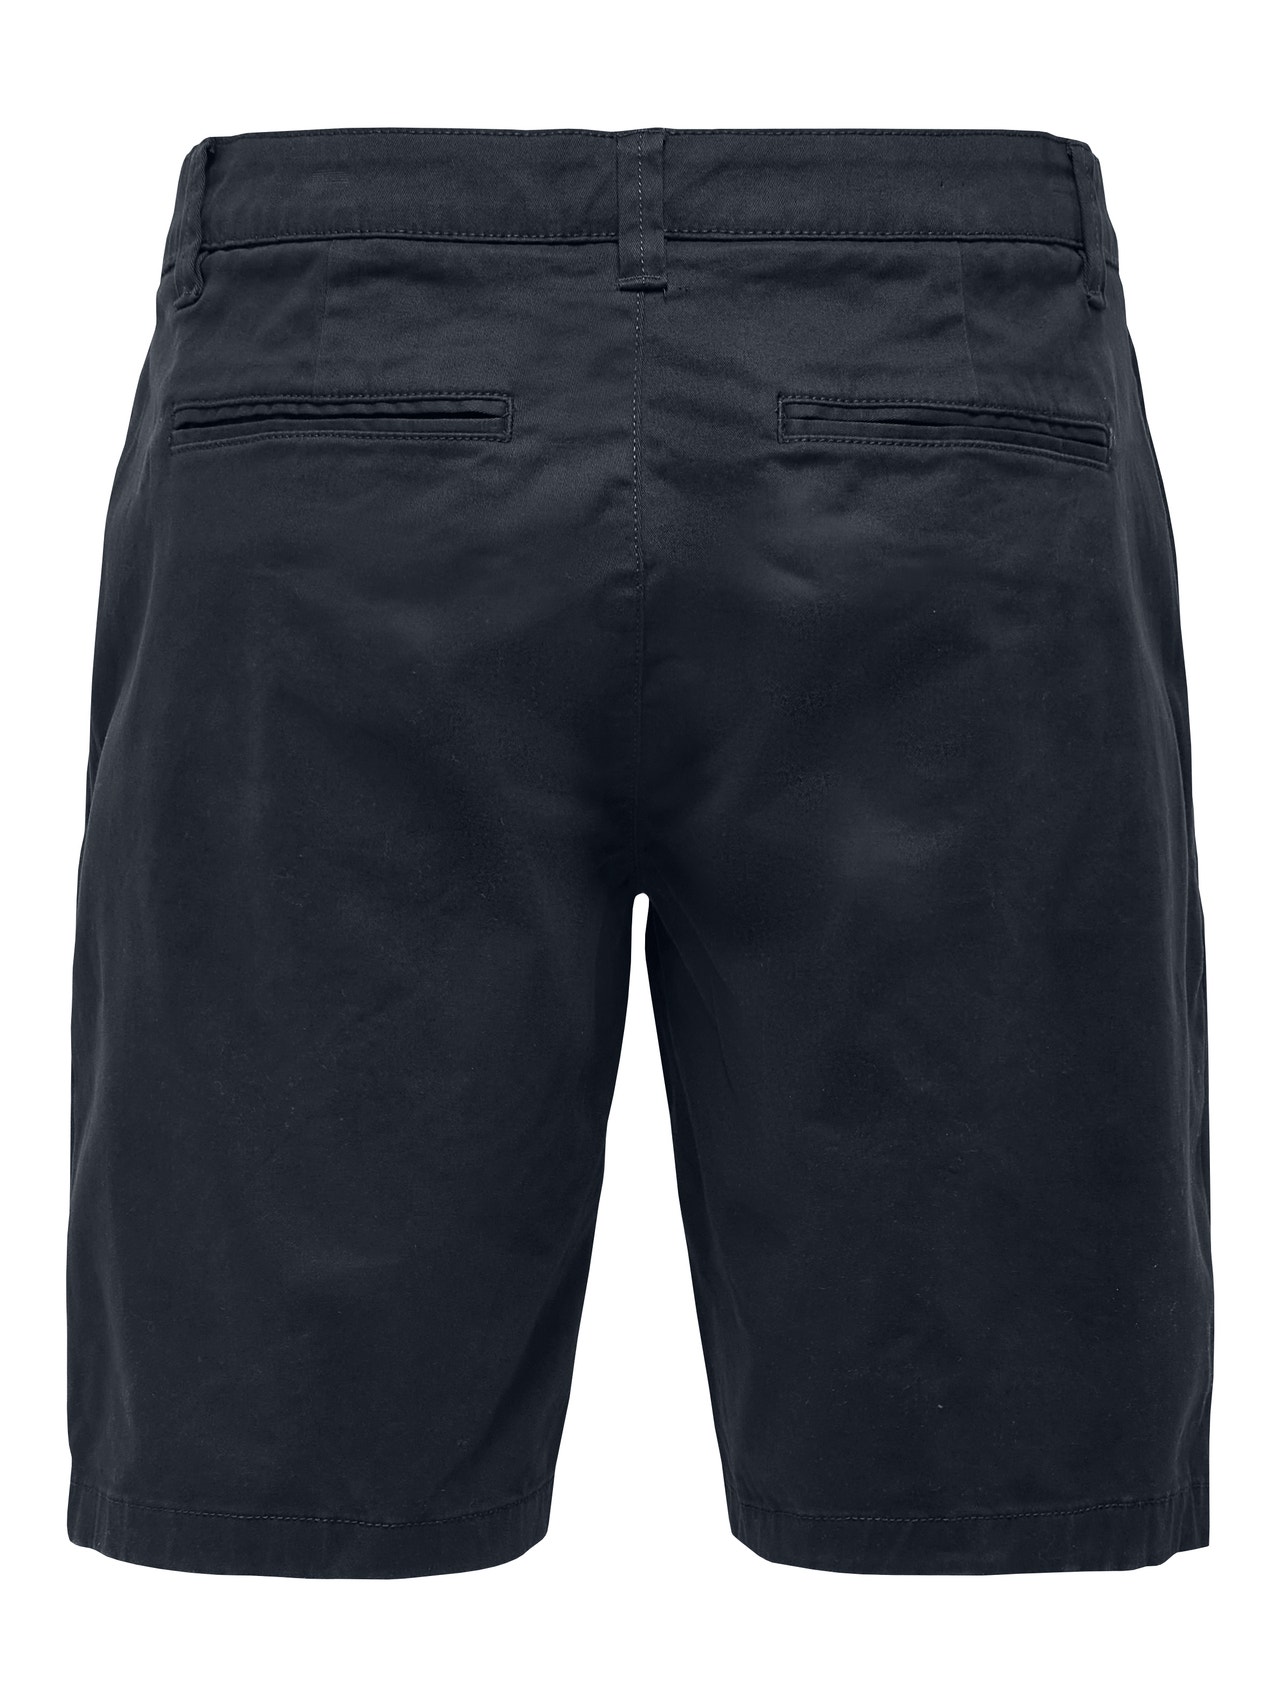 ONLY & SONS Regular Fit Shorts -Dark Navy - 22018237